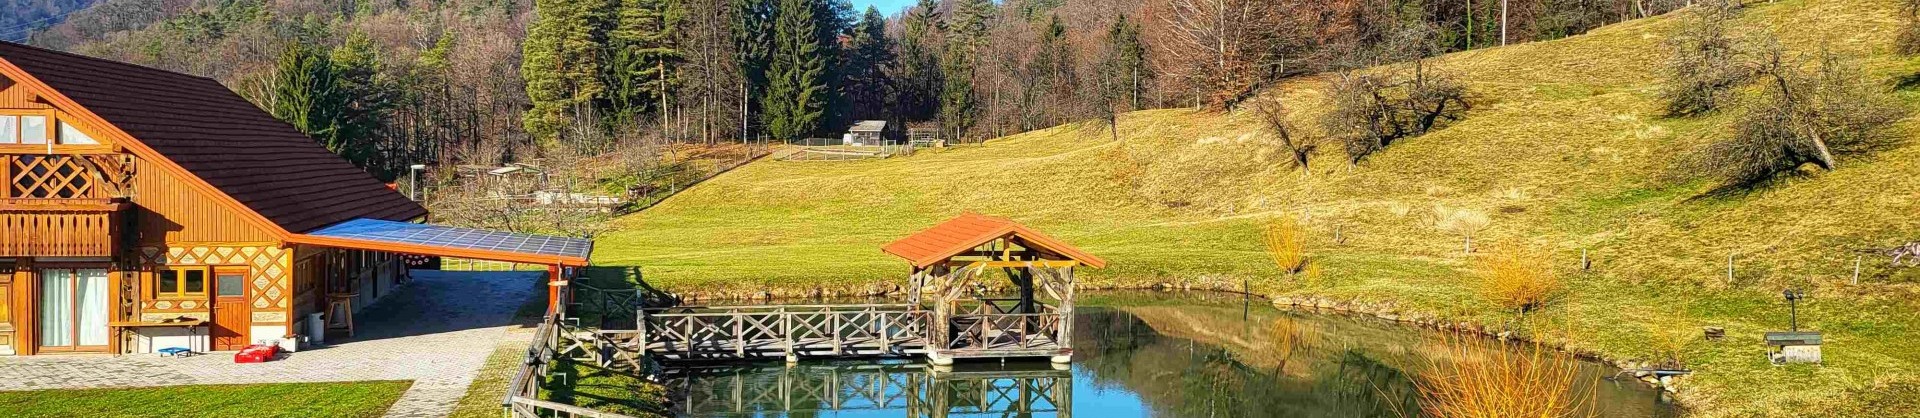 Piknic plac kos ribnik jezera slovenije slovenska jezera moja jezera manca korelc 6 sl